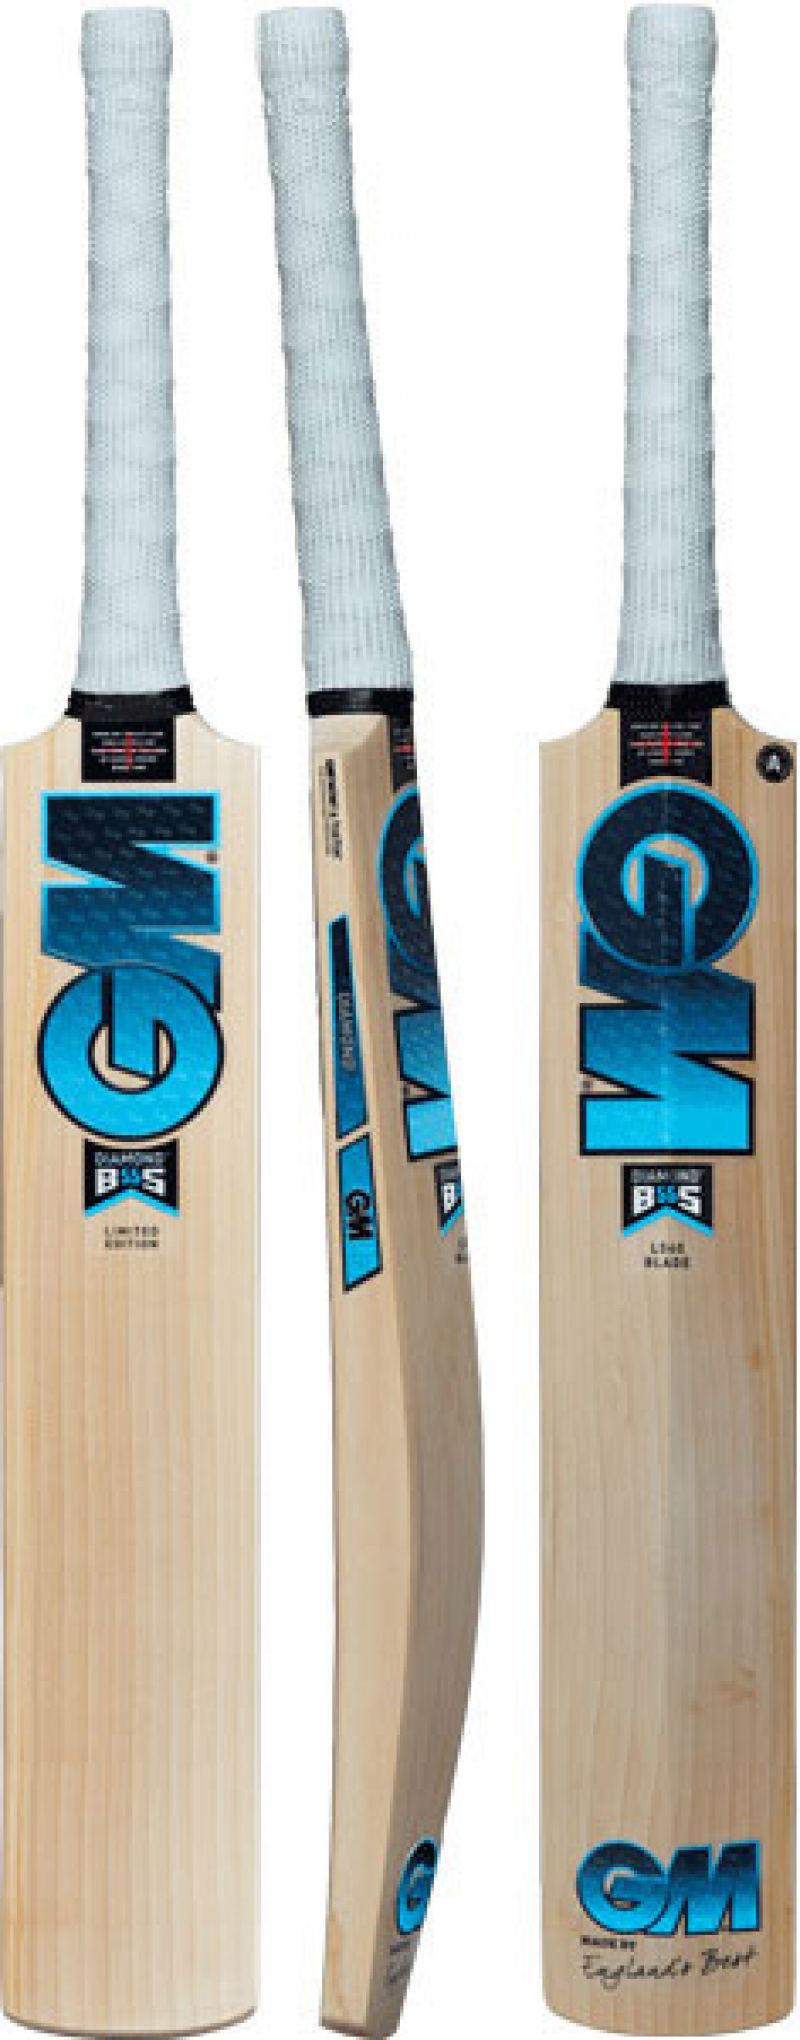 Gunn and Moore Diamond L540 DXM 606 Cricket Bat